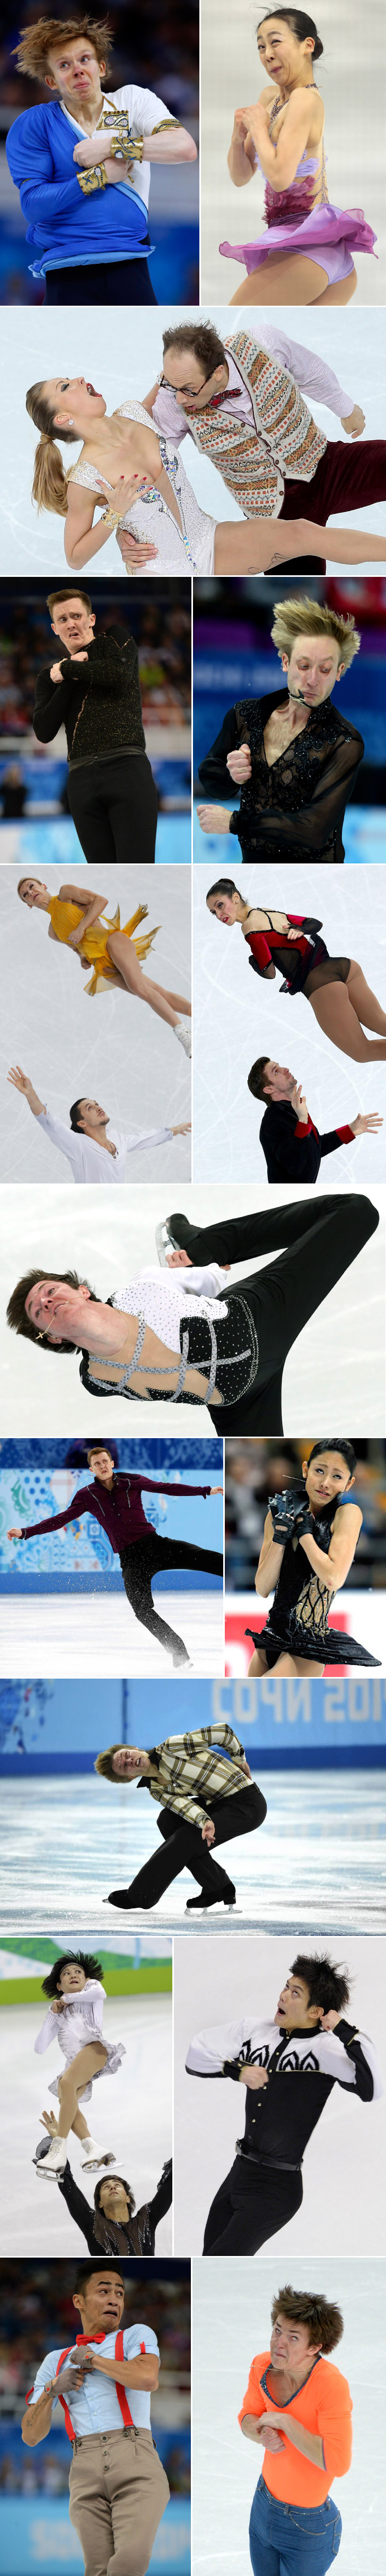 faces_from_sochi_olympics.jpg